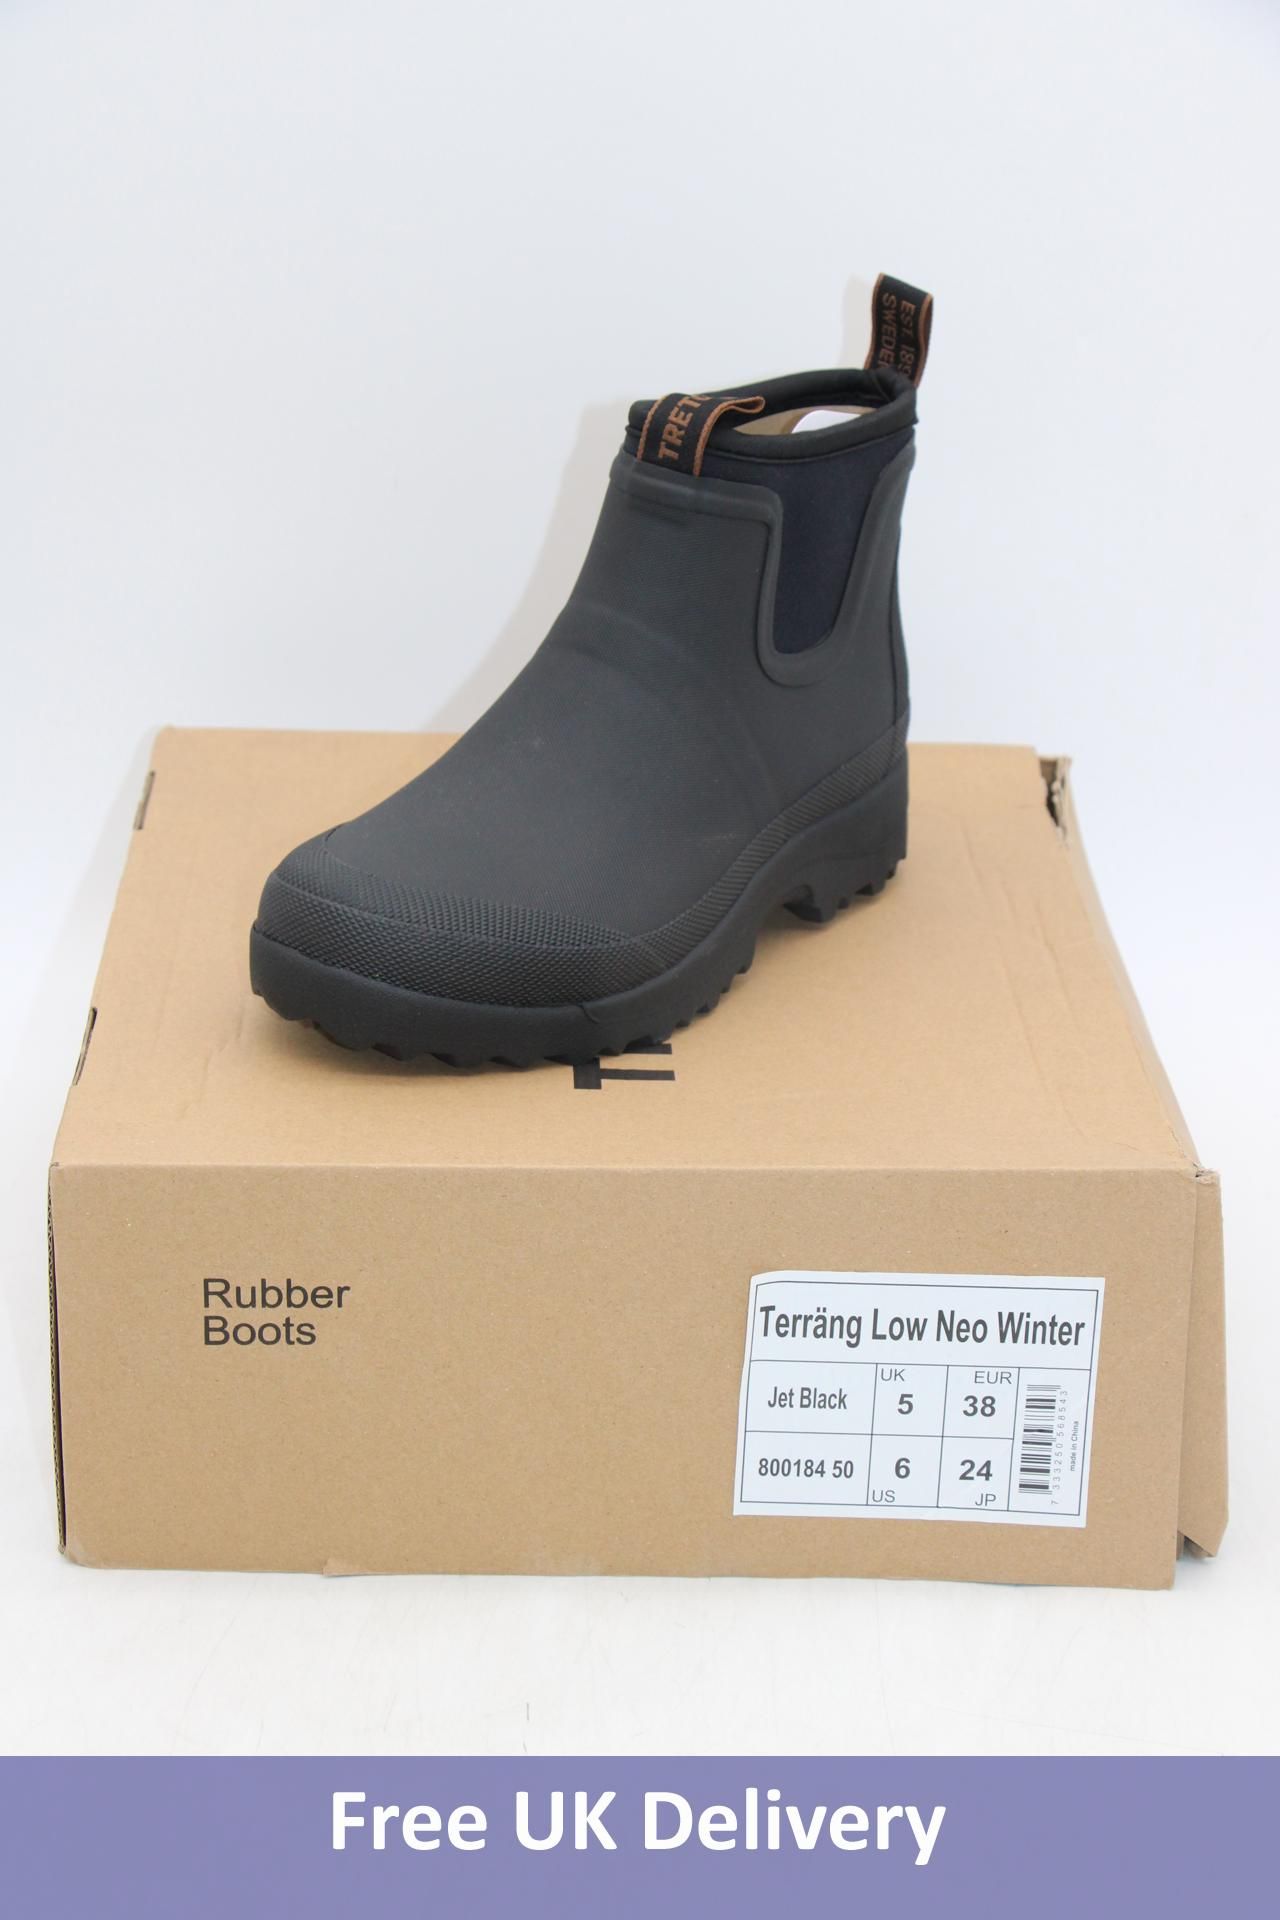 Tretorn Terrang Low Neo Winter Rubber Boot, Jet Black, Size UK 5